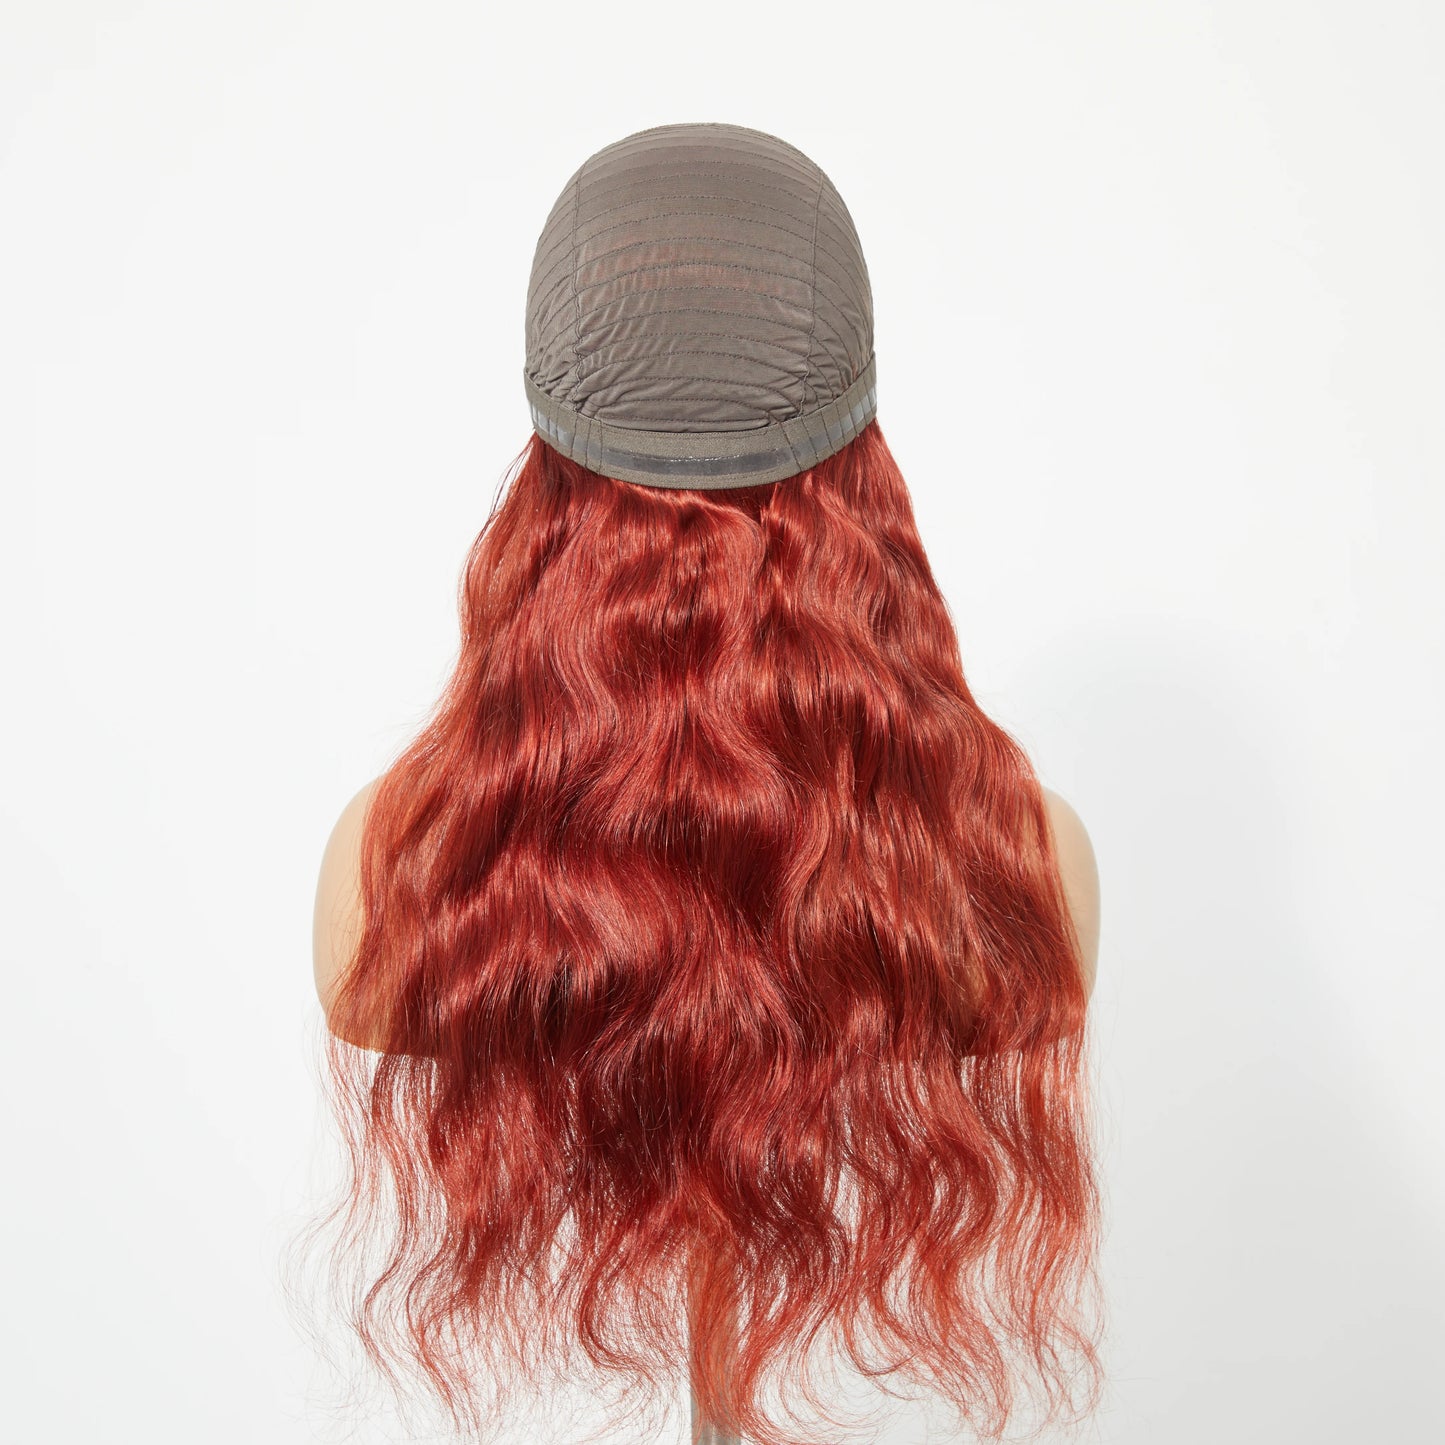 SMALL HEAD FRIENDLY LACE WIG - 24 Inches 5"x5" Body Wavy Wear & Go Glueless #Redbrown Lace Closure Wig-100% Human Hair